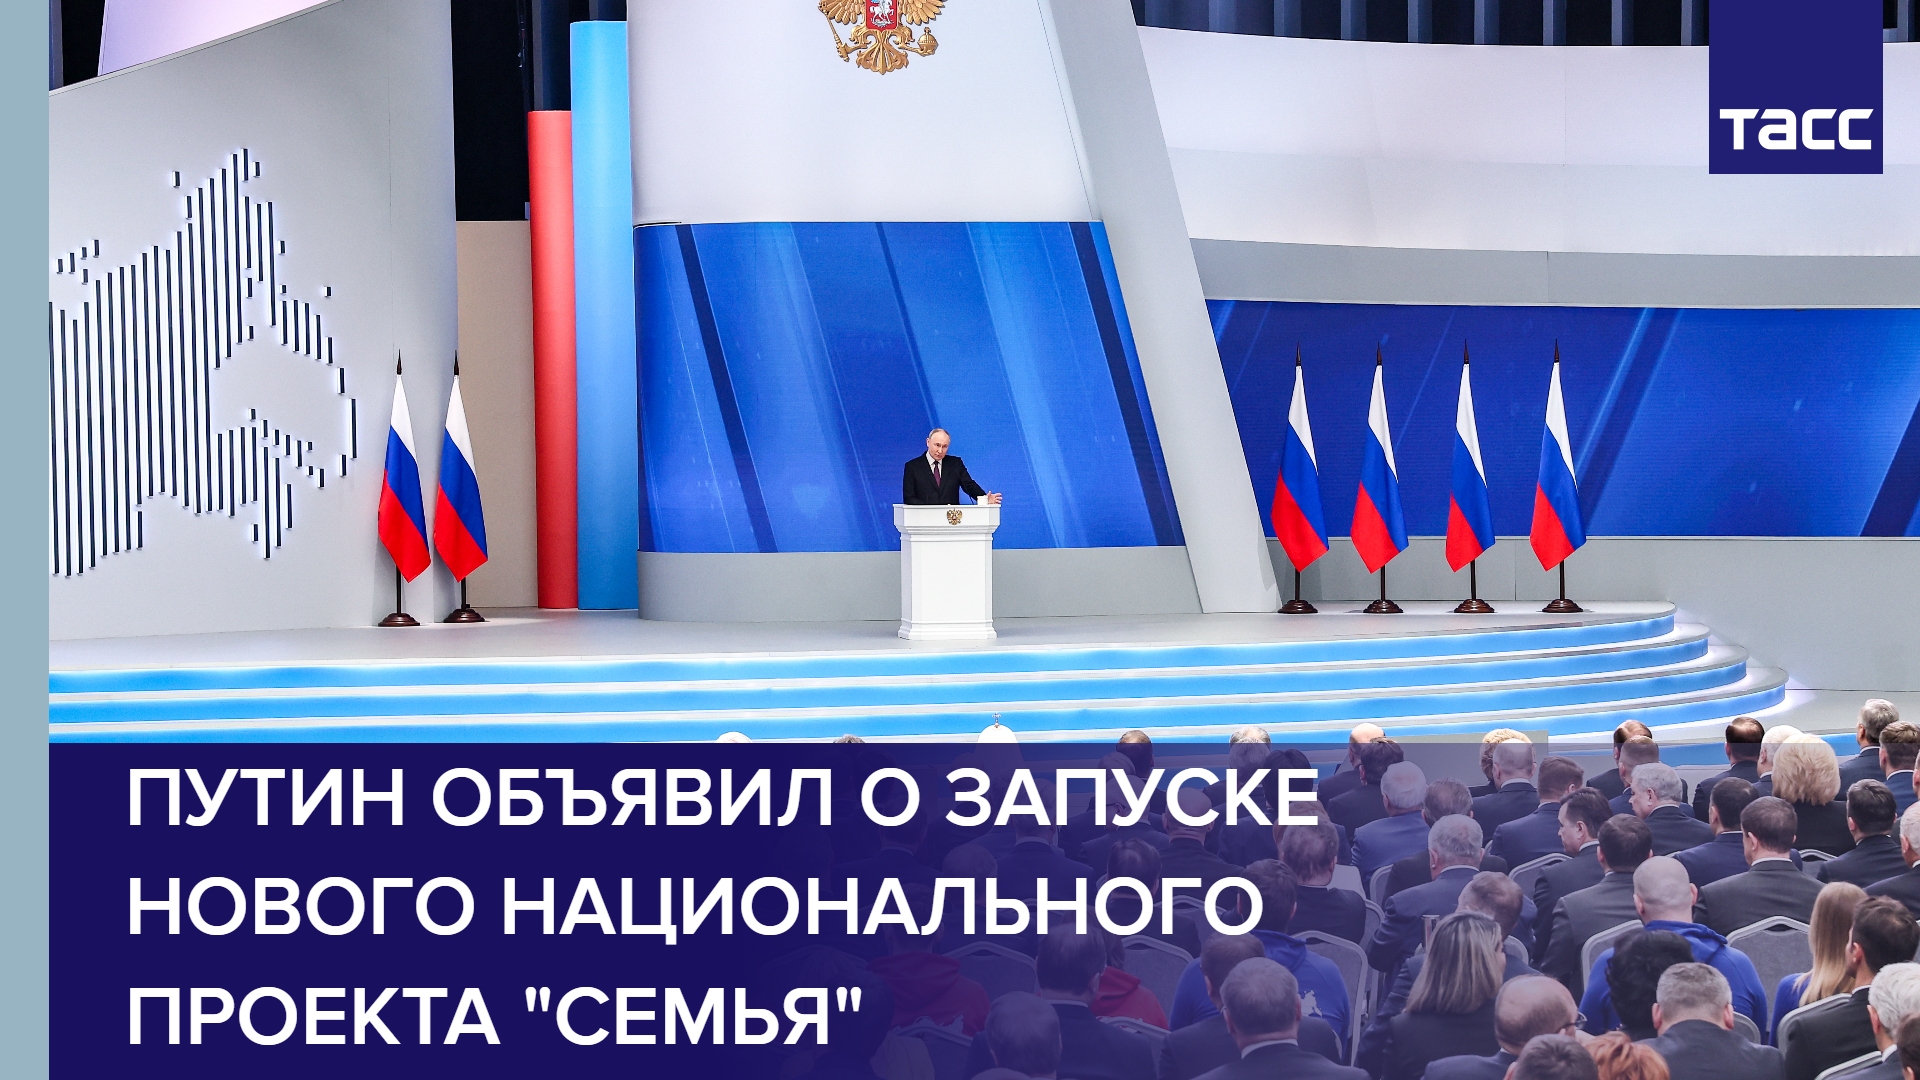 Путин объявил о запуске нового национального проекта "Семья"